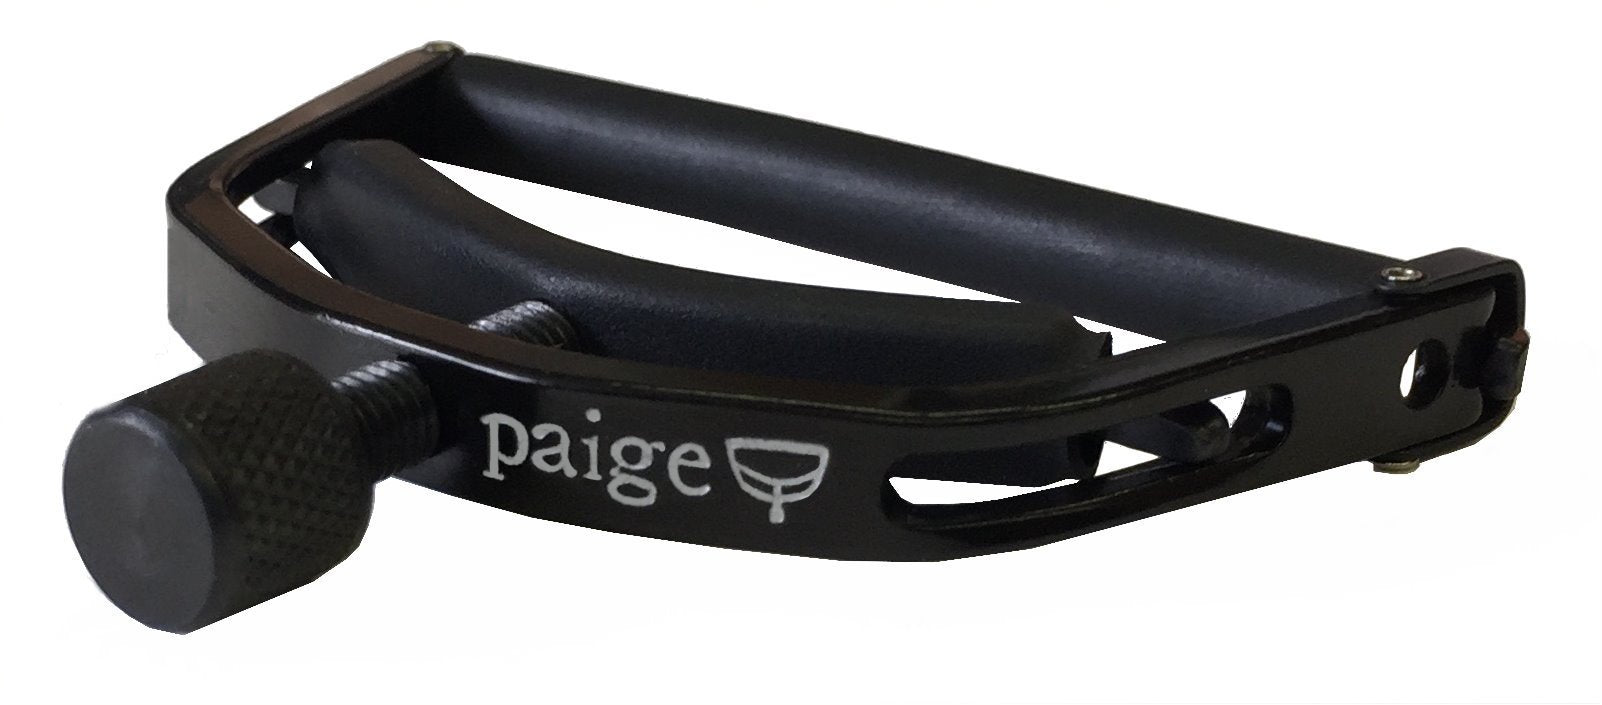 Paige 6 String Guitar Capo - Wide/Low Profile Black